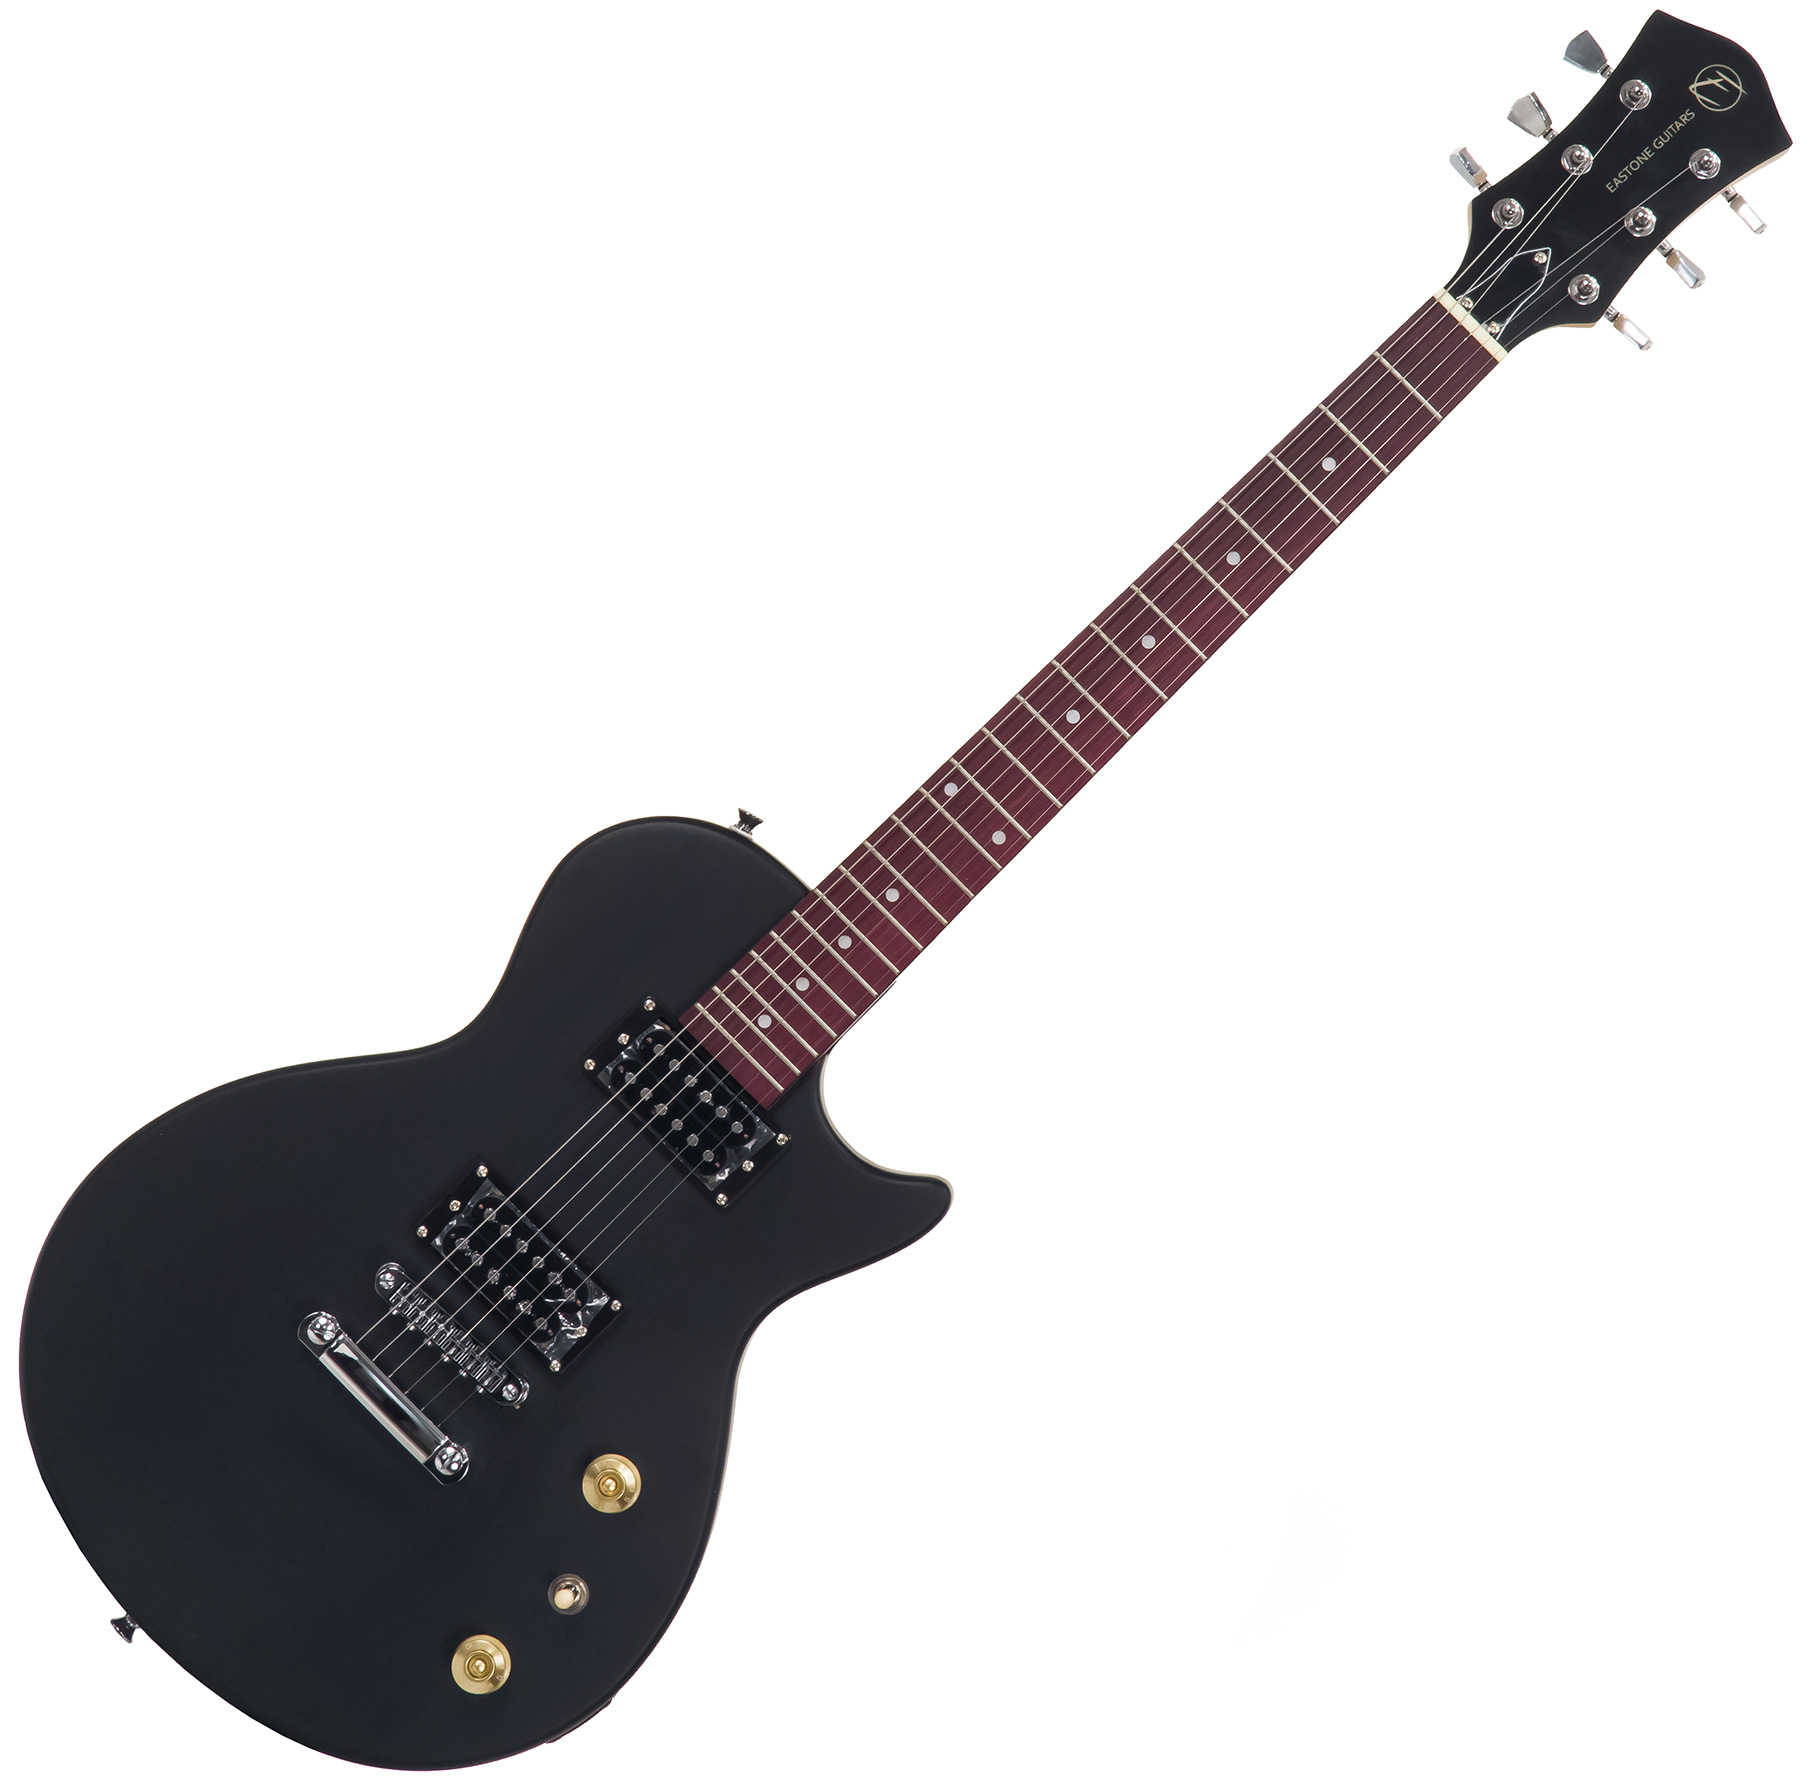 Eastone Lpl70 +marshall Mg10g +cable +housse +courroie +mediators - Black Satin - Electric guitar set - Variation 1